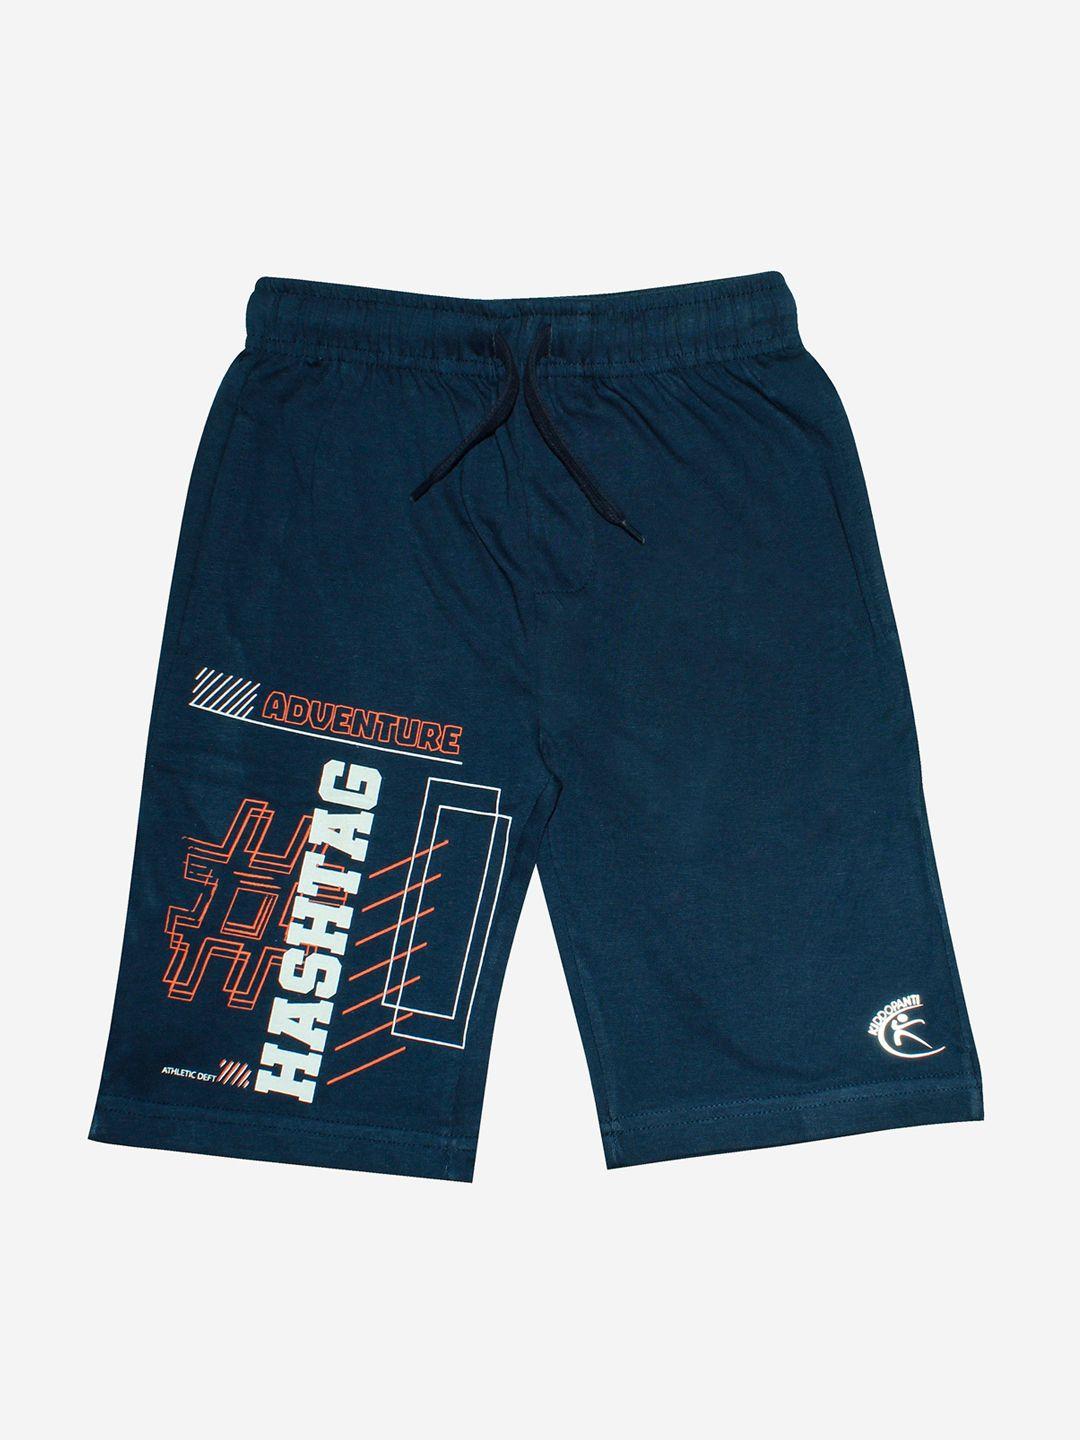 kiddopanti boys navy blue printed shorts